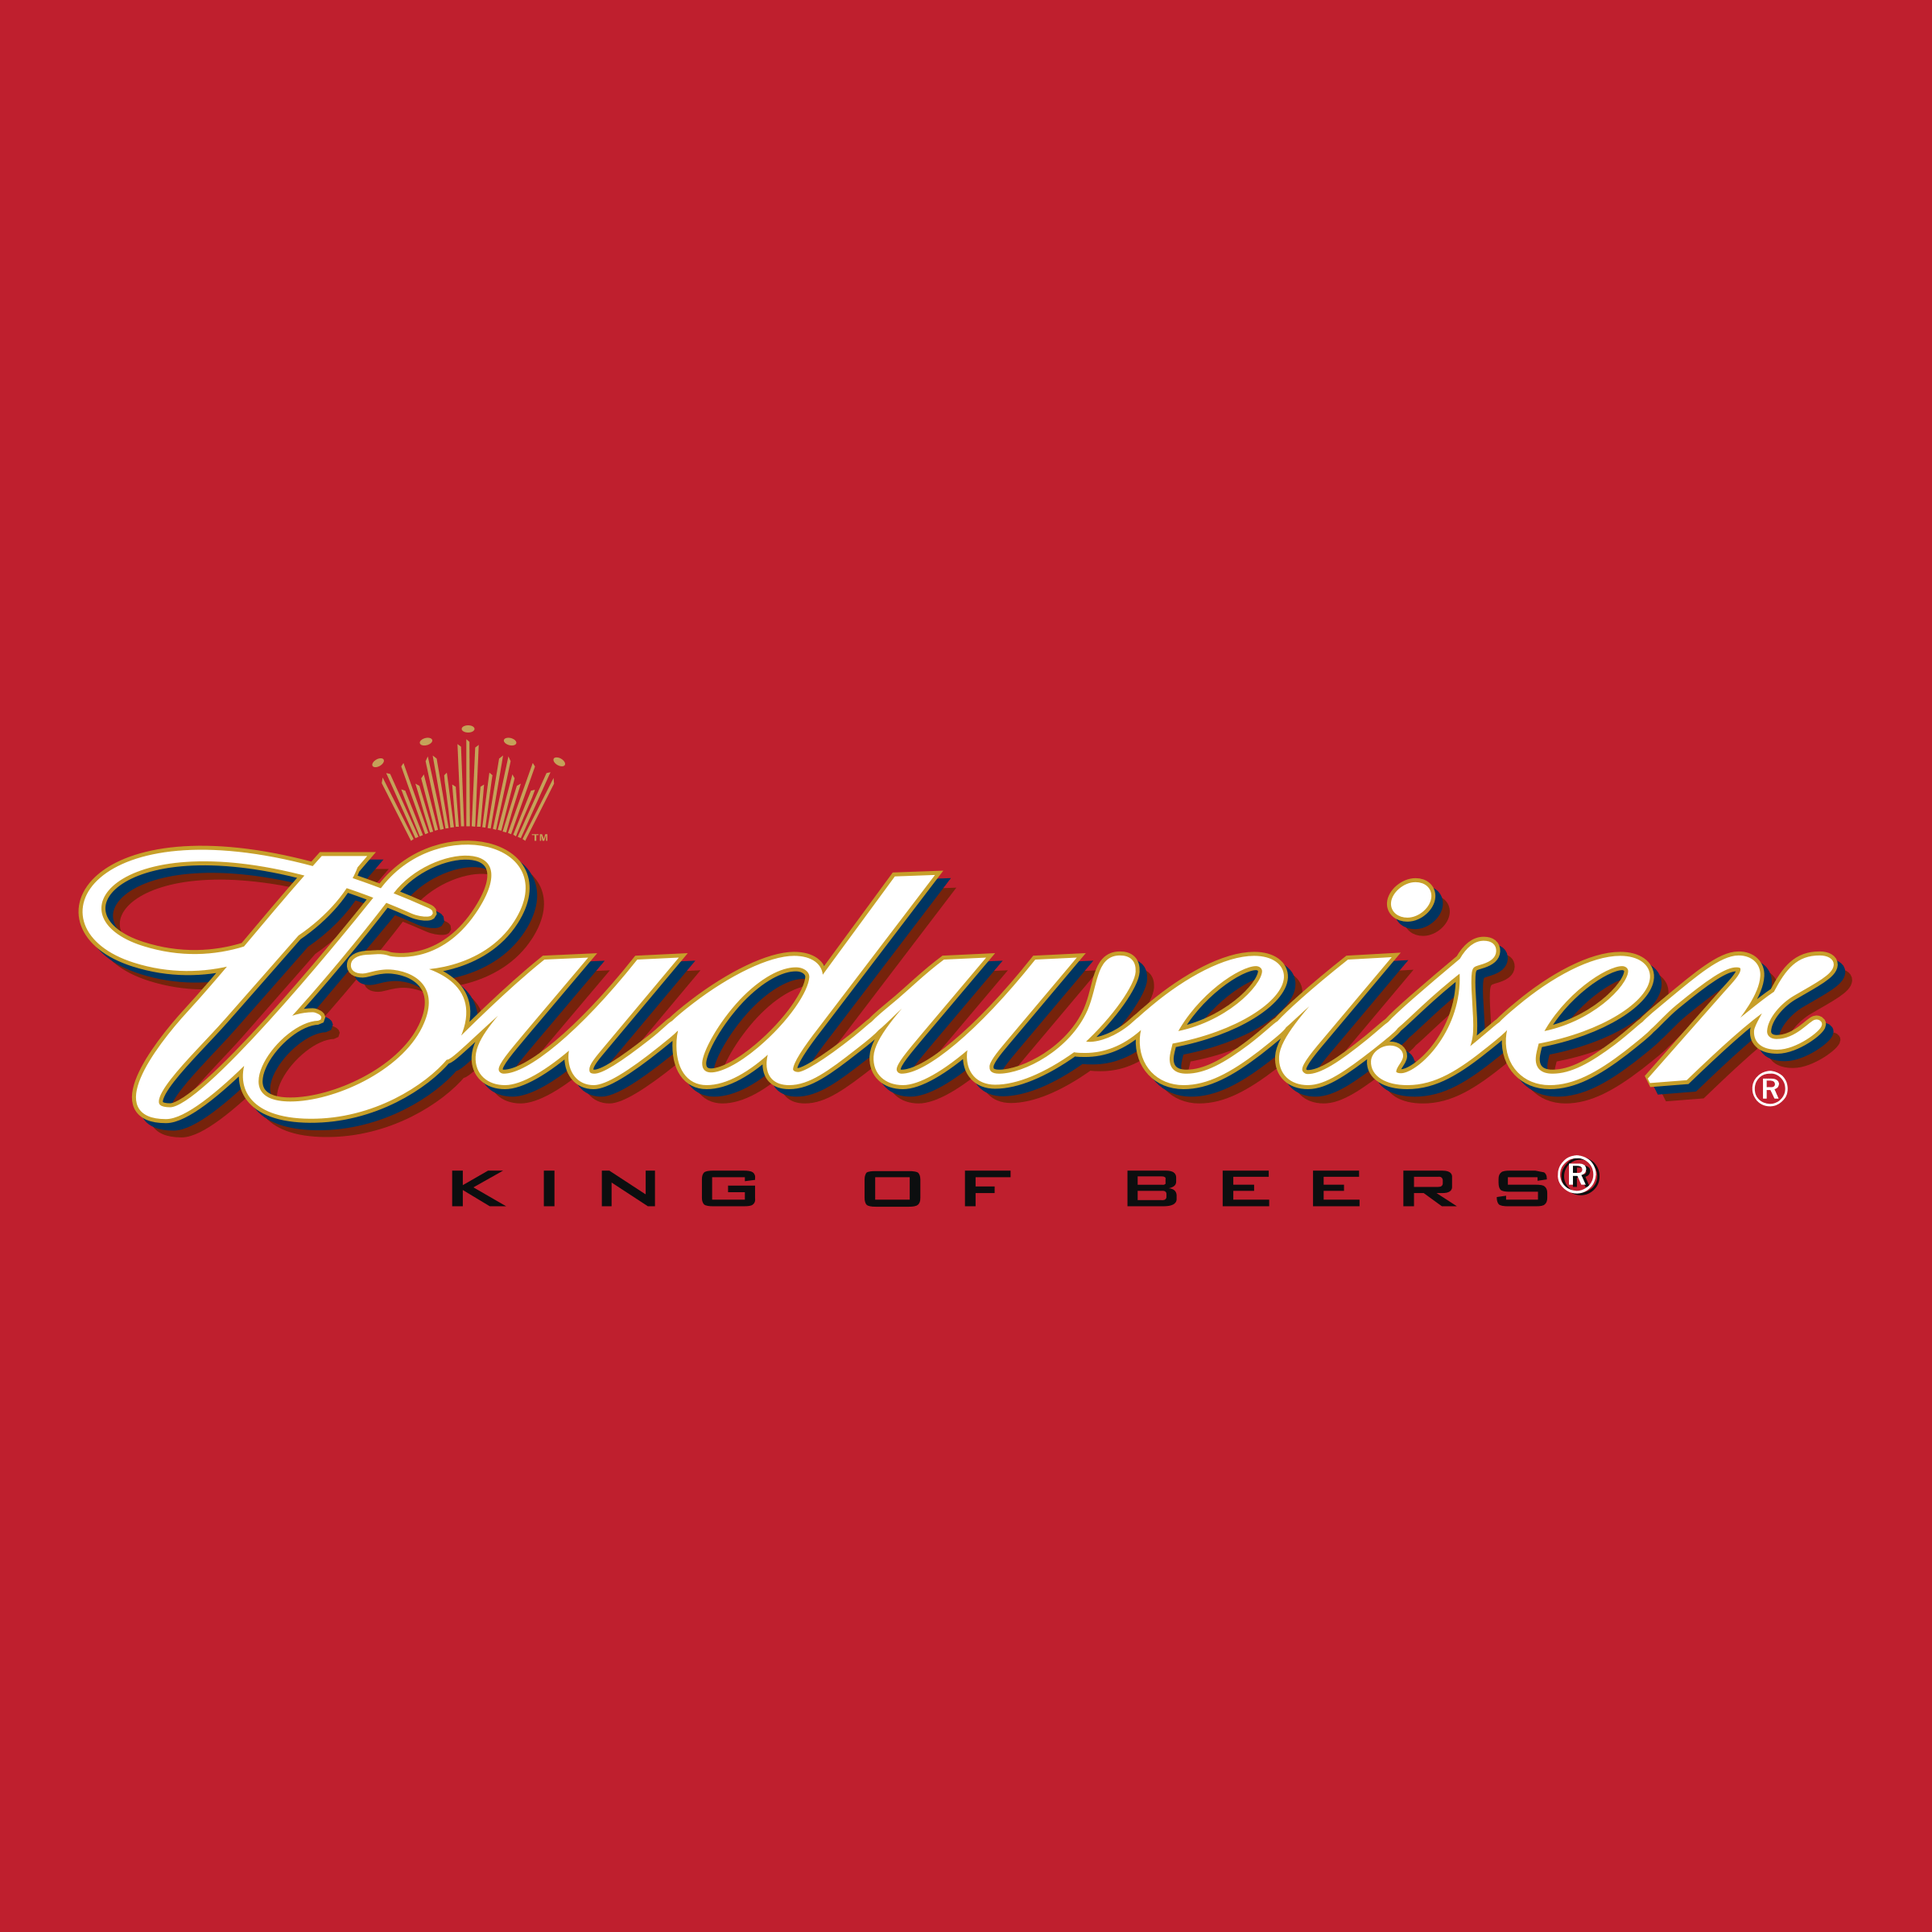 Budweiser Logo - Budweiser Logo PNG Transparent & SVG Vector - Freebie Supply